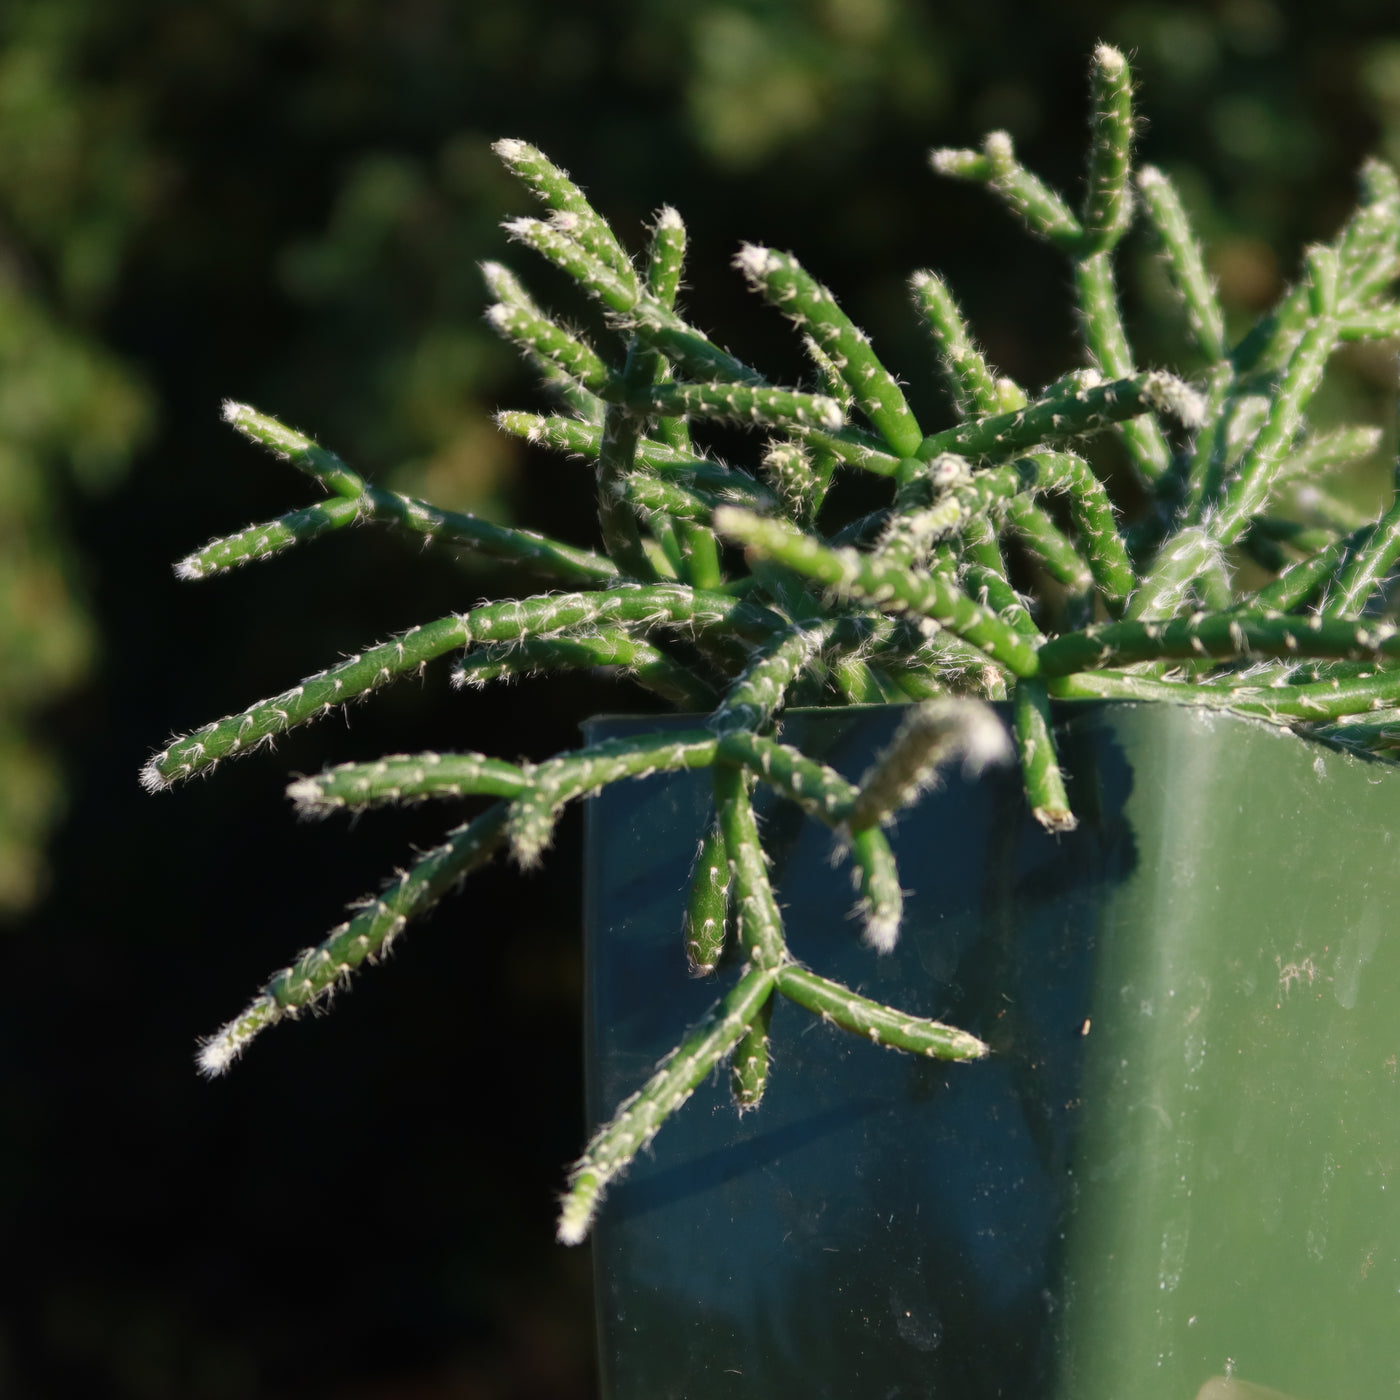 Jungle Cactus 'Rhipsalis pilocarpa'